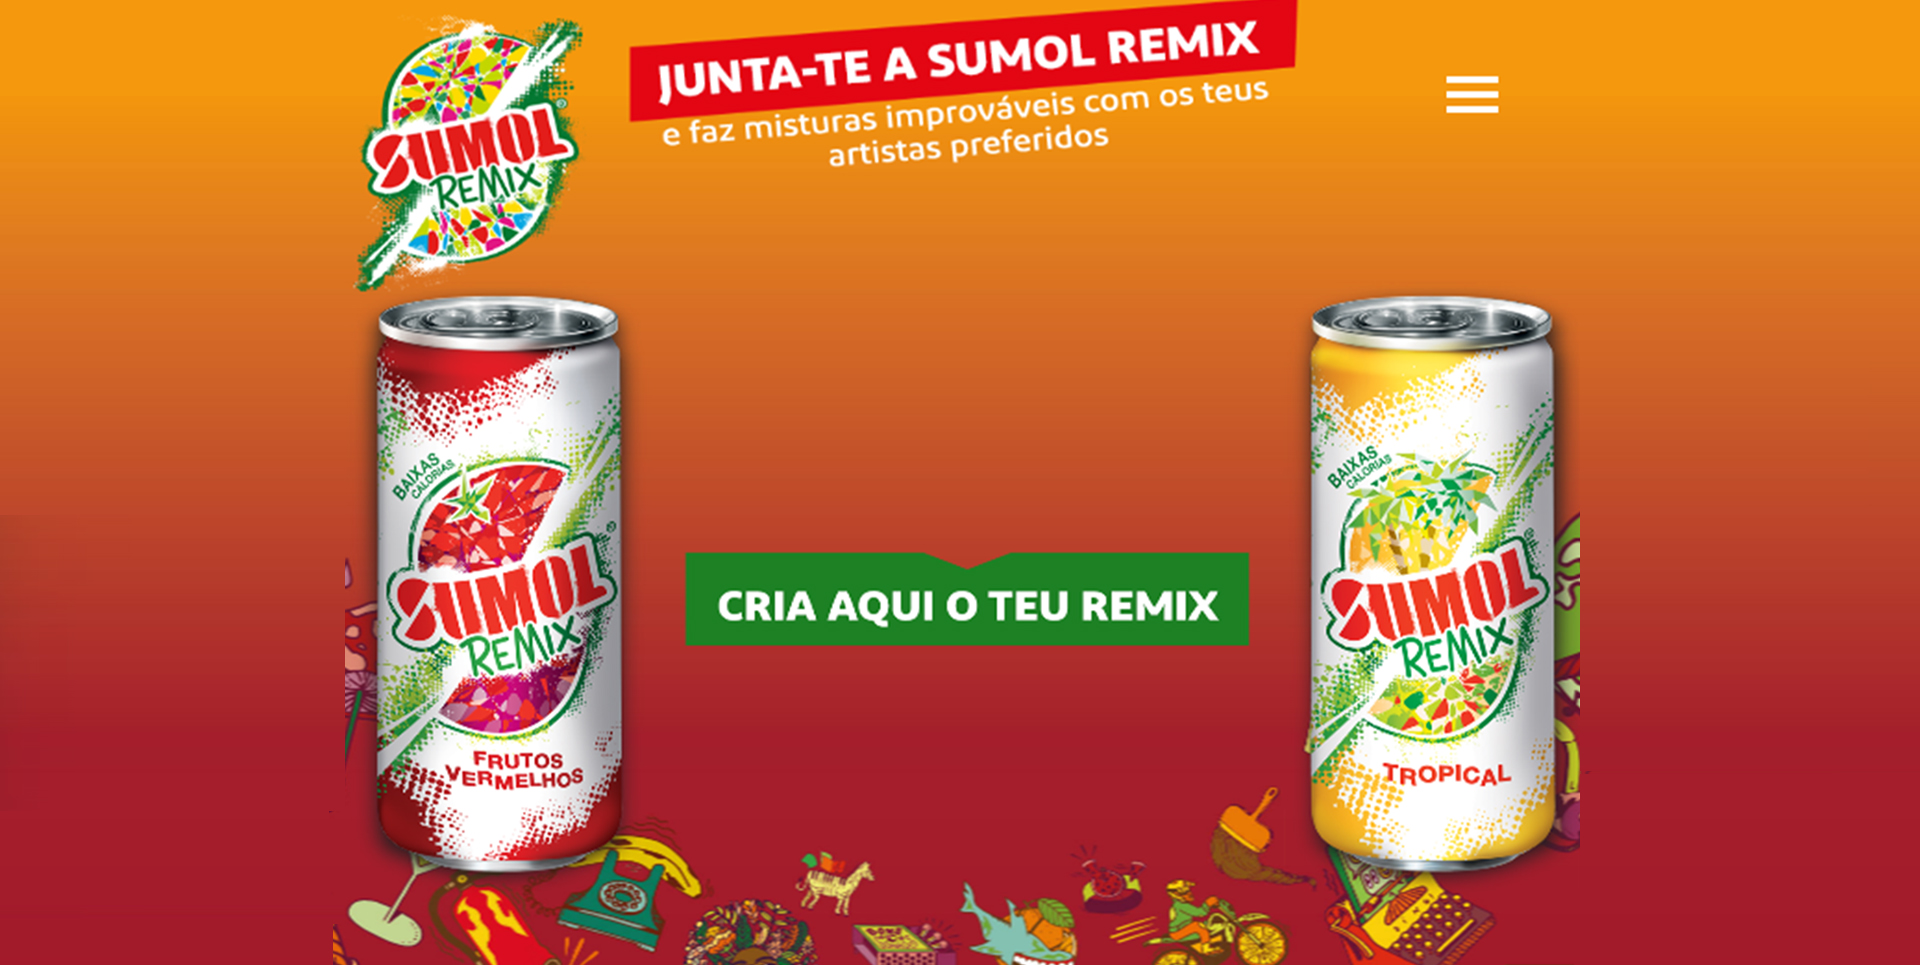 Sumol - Remix